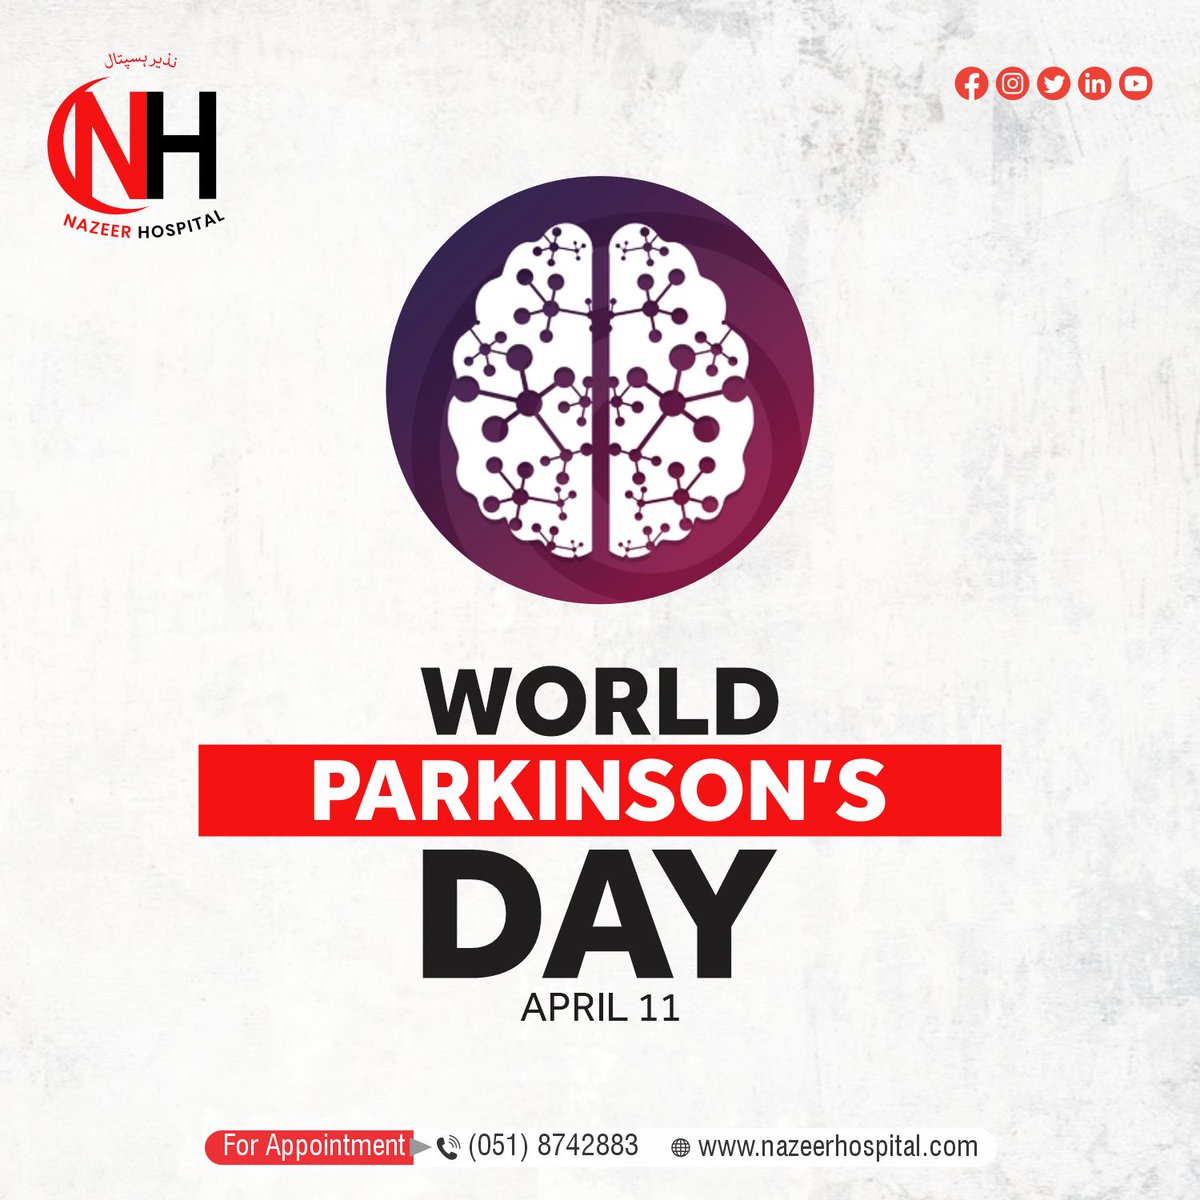 we unite to raise awareness for World Parkinson's Day!
Visit: nazeerhospital.com
Call: 051 8742883
Email: contact@nazeerhospital.com
Location: 311/2 Main Peshawar Road, Rawalpindi, Pakistan
#WorldParkinsonDay #ParkinsonsAwareness #UniteForParkinsons #HopeForACure